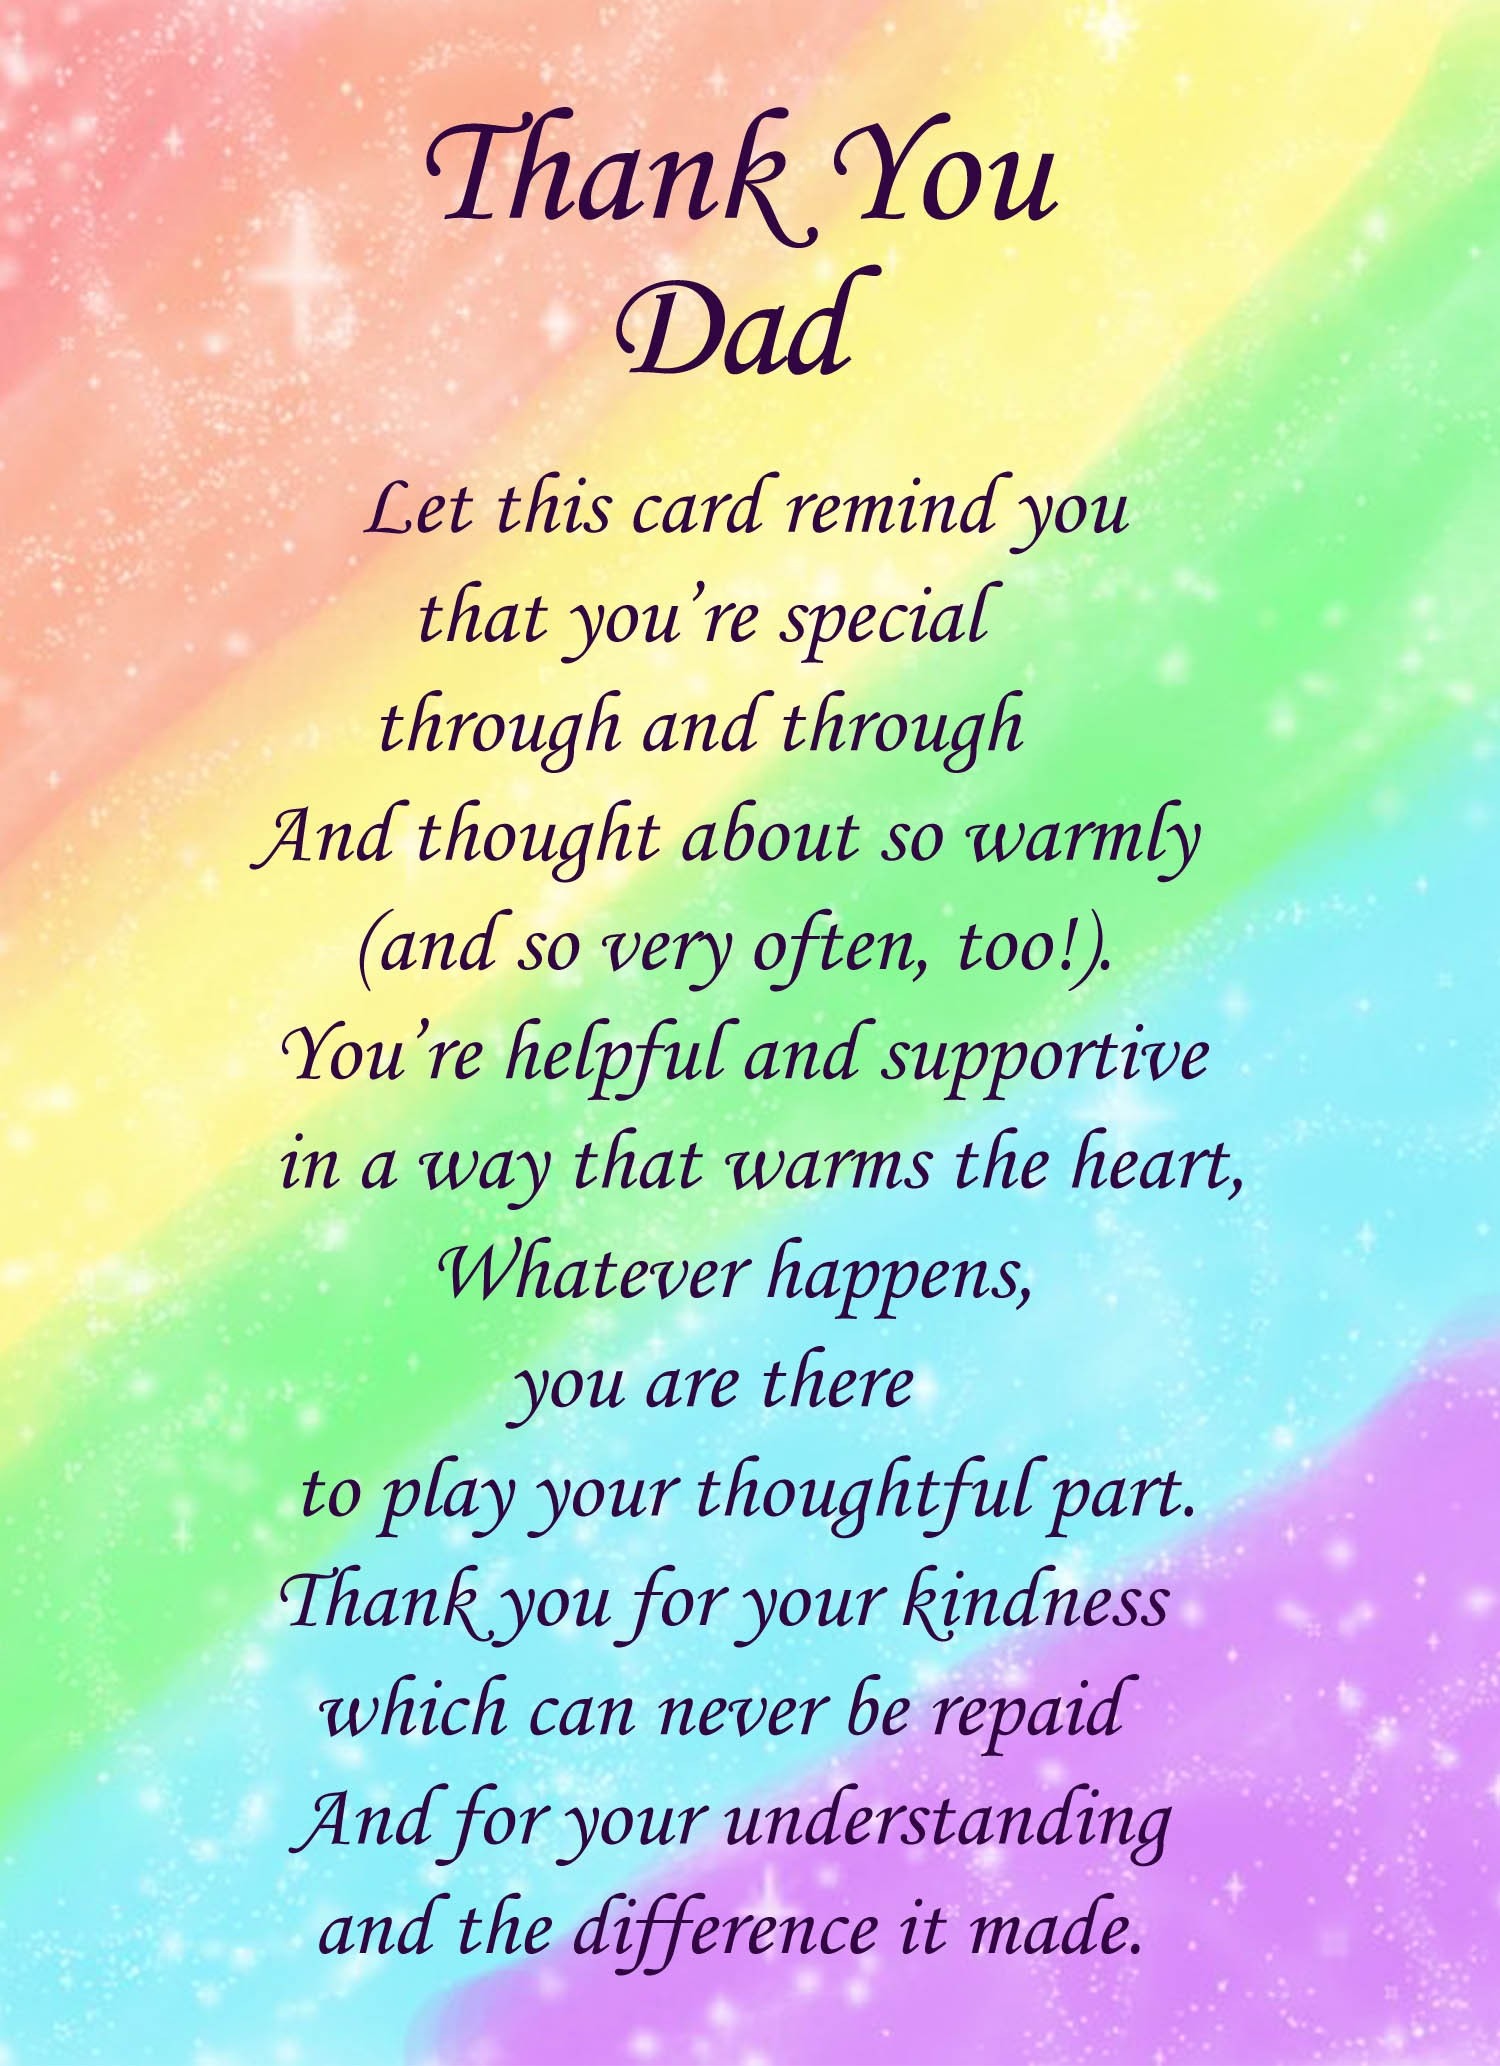 Thank You 'Dad' Poem Verse Greeting Card